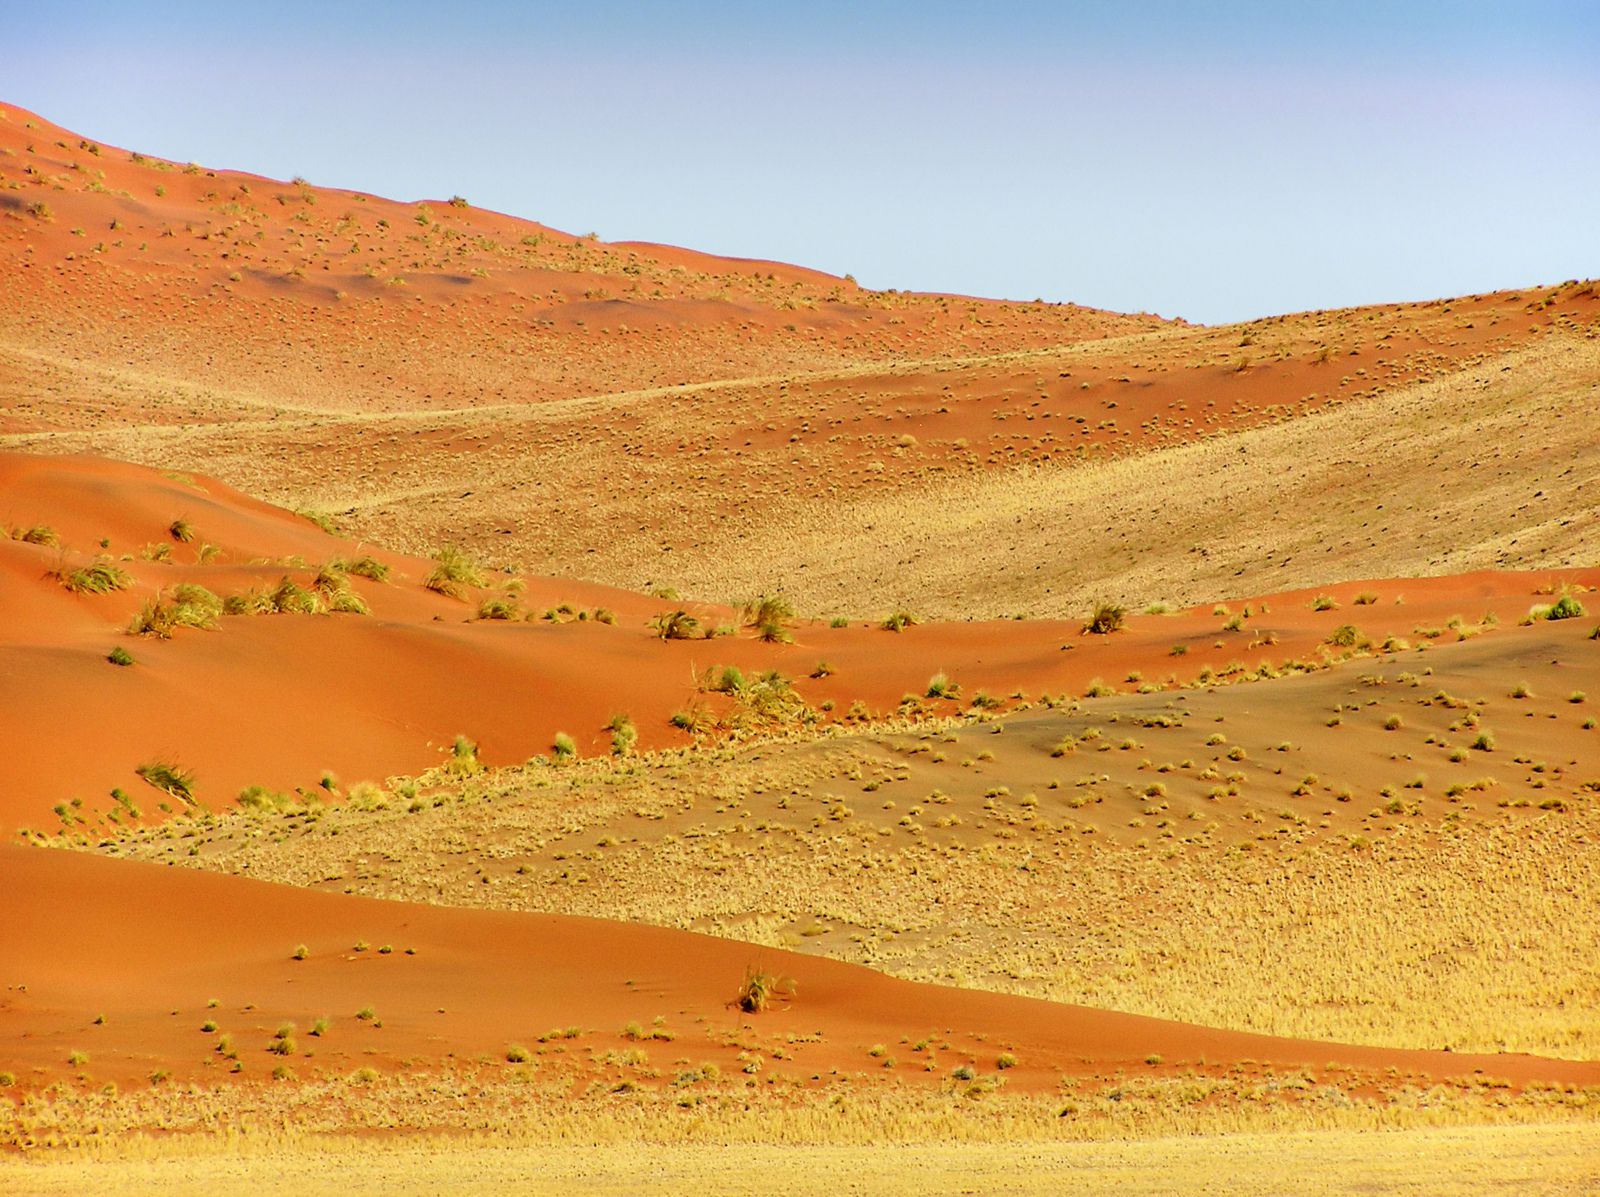 Désert du Namib - Namibie - Quiz image - Un autre regard sur la Terre - Dunes - Sossusvlei - Winfried Bruenken